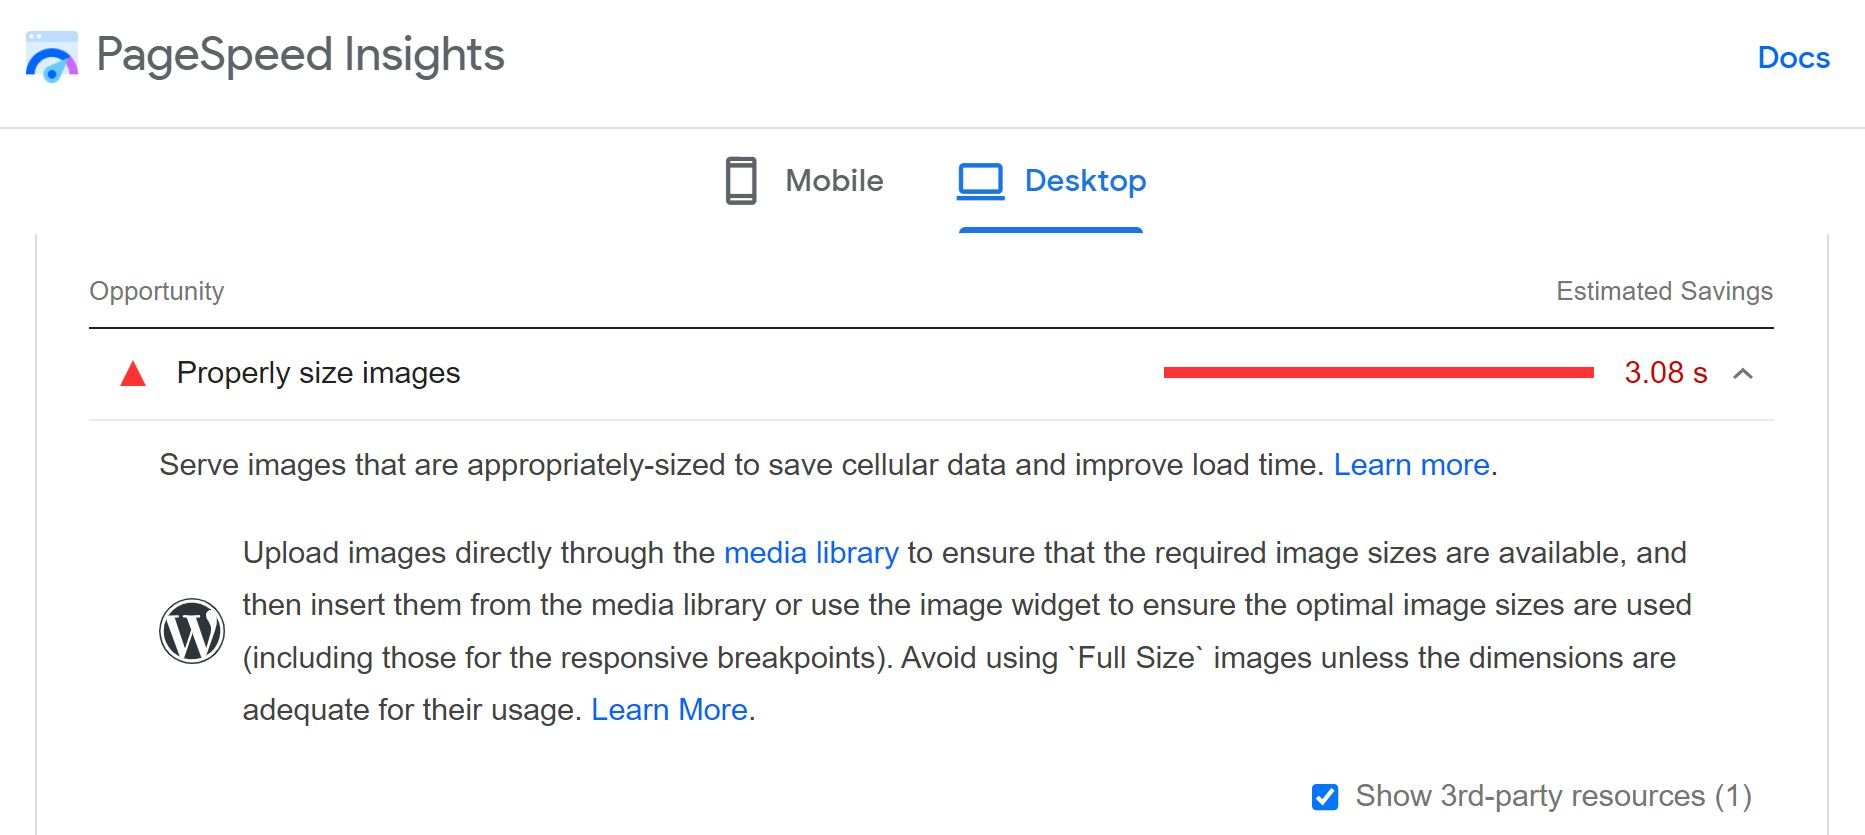 PageSpeed Insights 建議調整圖像大小可以提高您的最大內容繪製分數。 